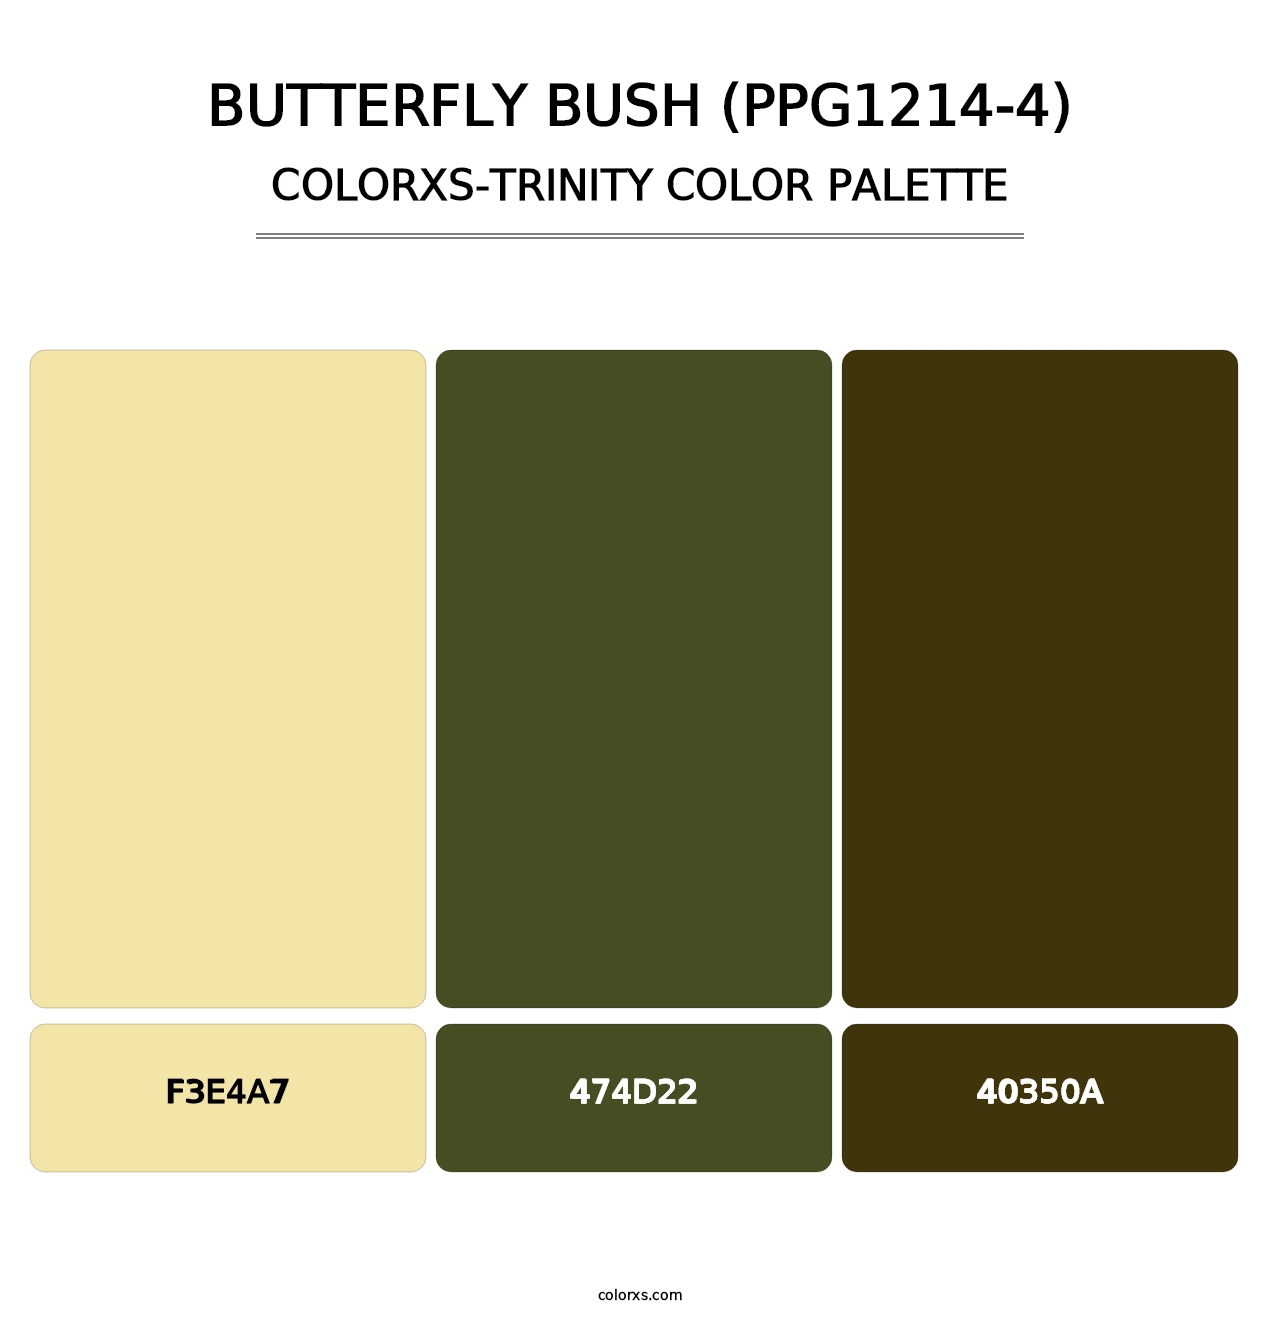 Butterfly Bush (PPG1214-4) - Colorxs Trinity Palette